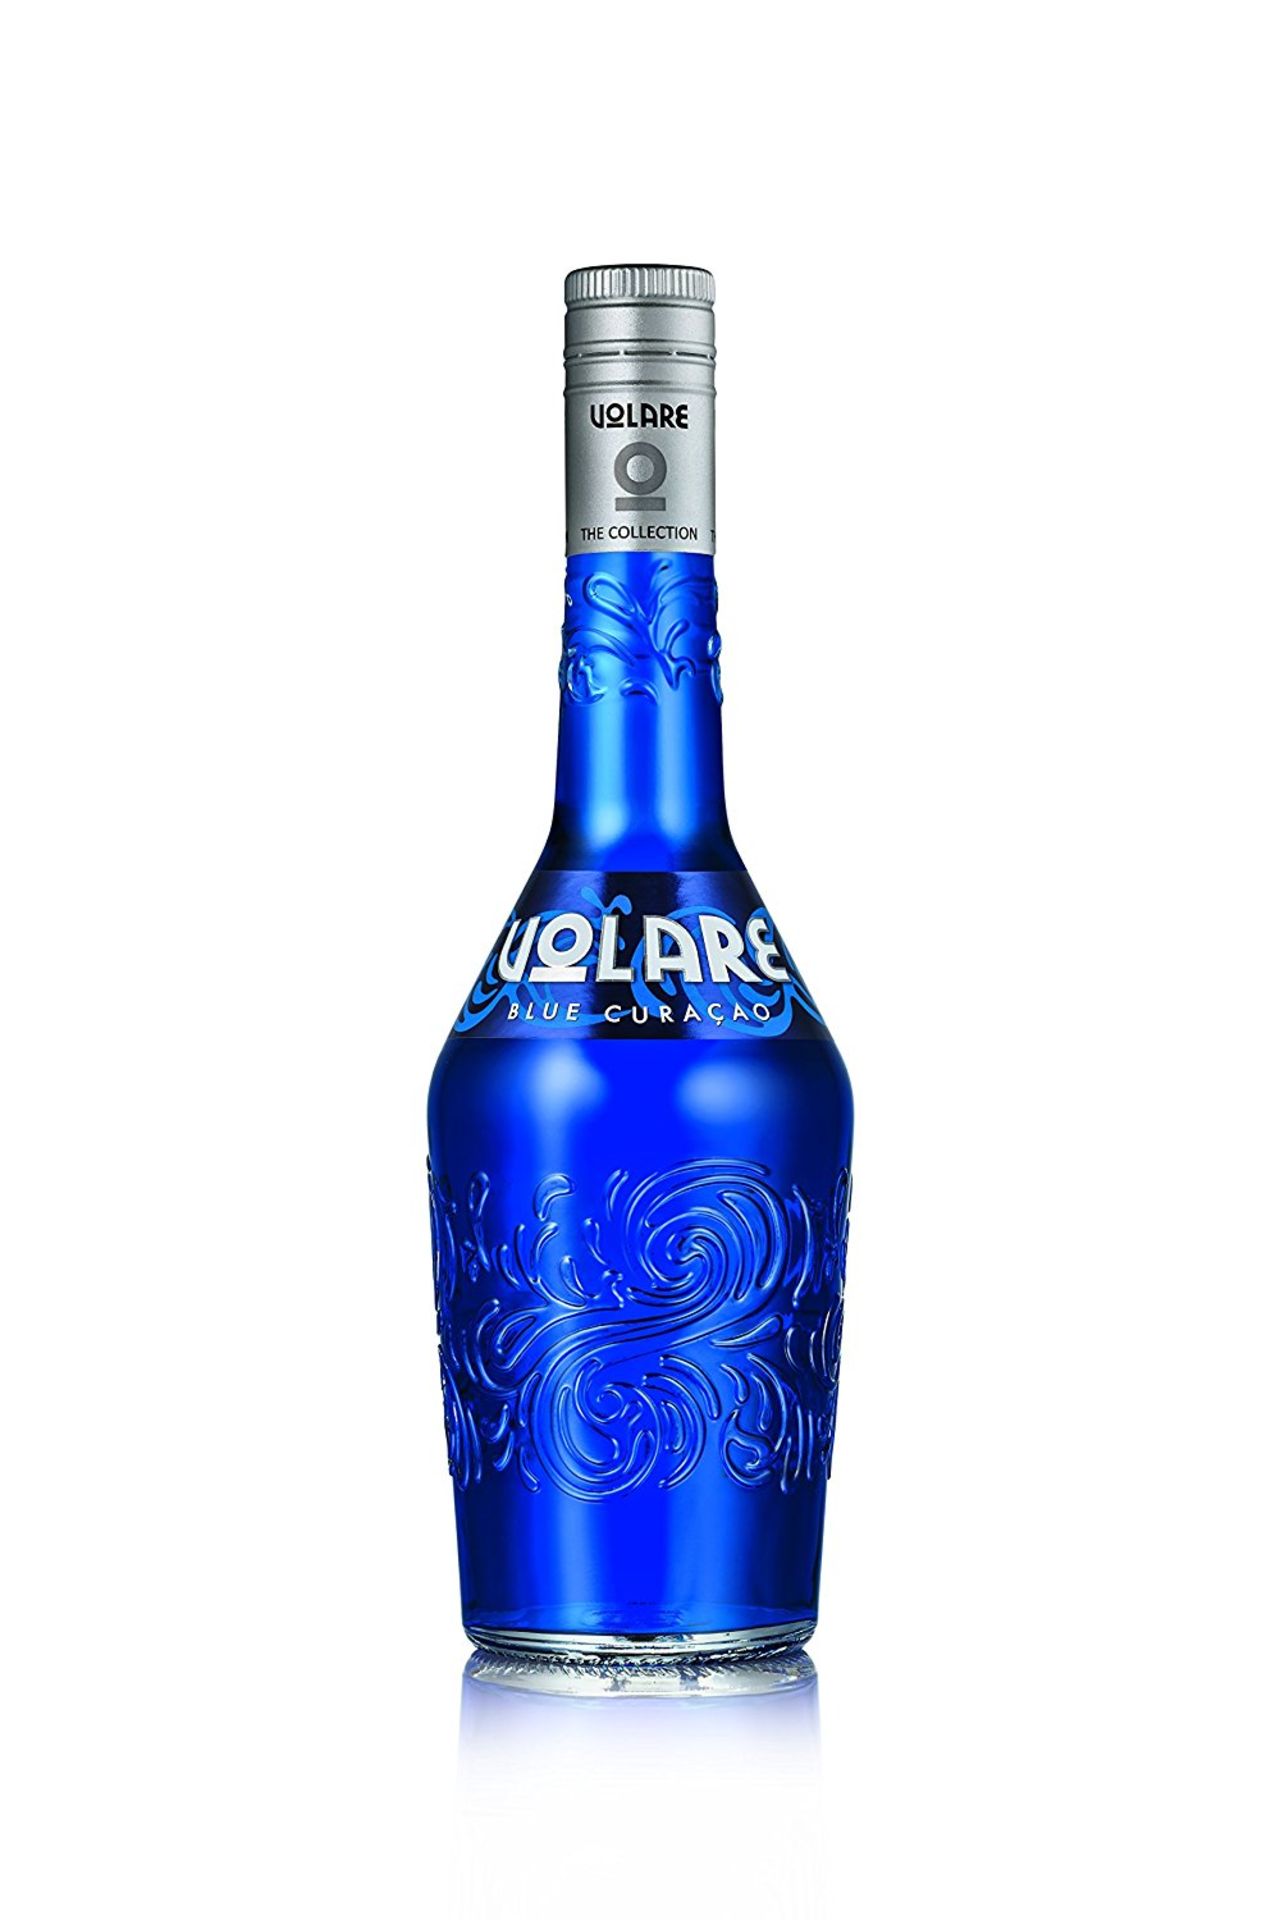 V Brand New Volaire Blue Curacoa 700ml - Amazon Price £17.99